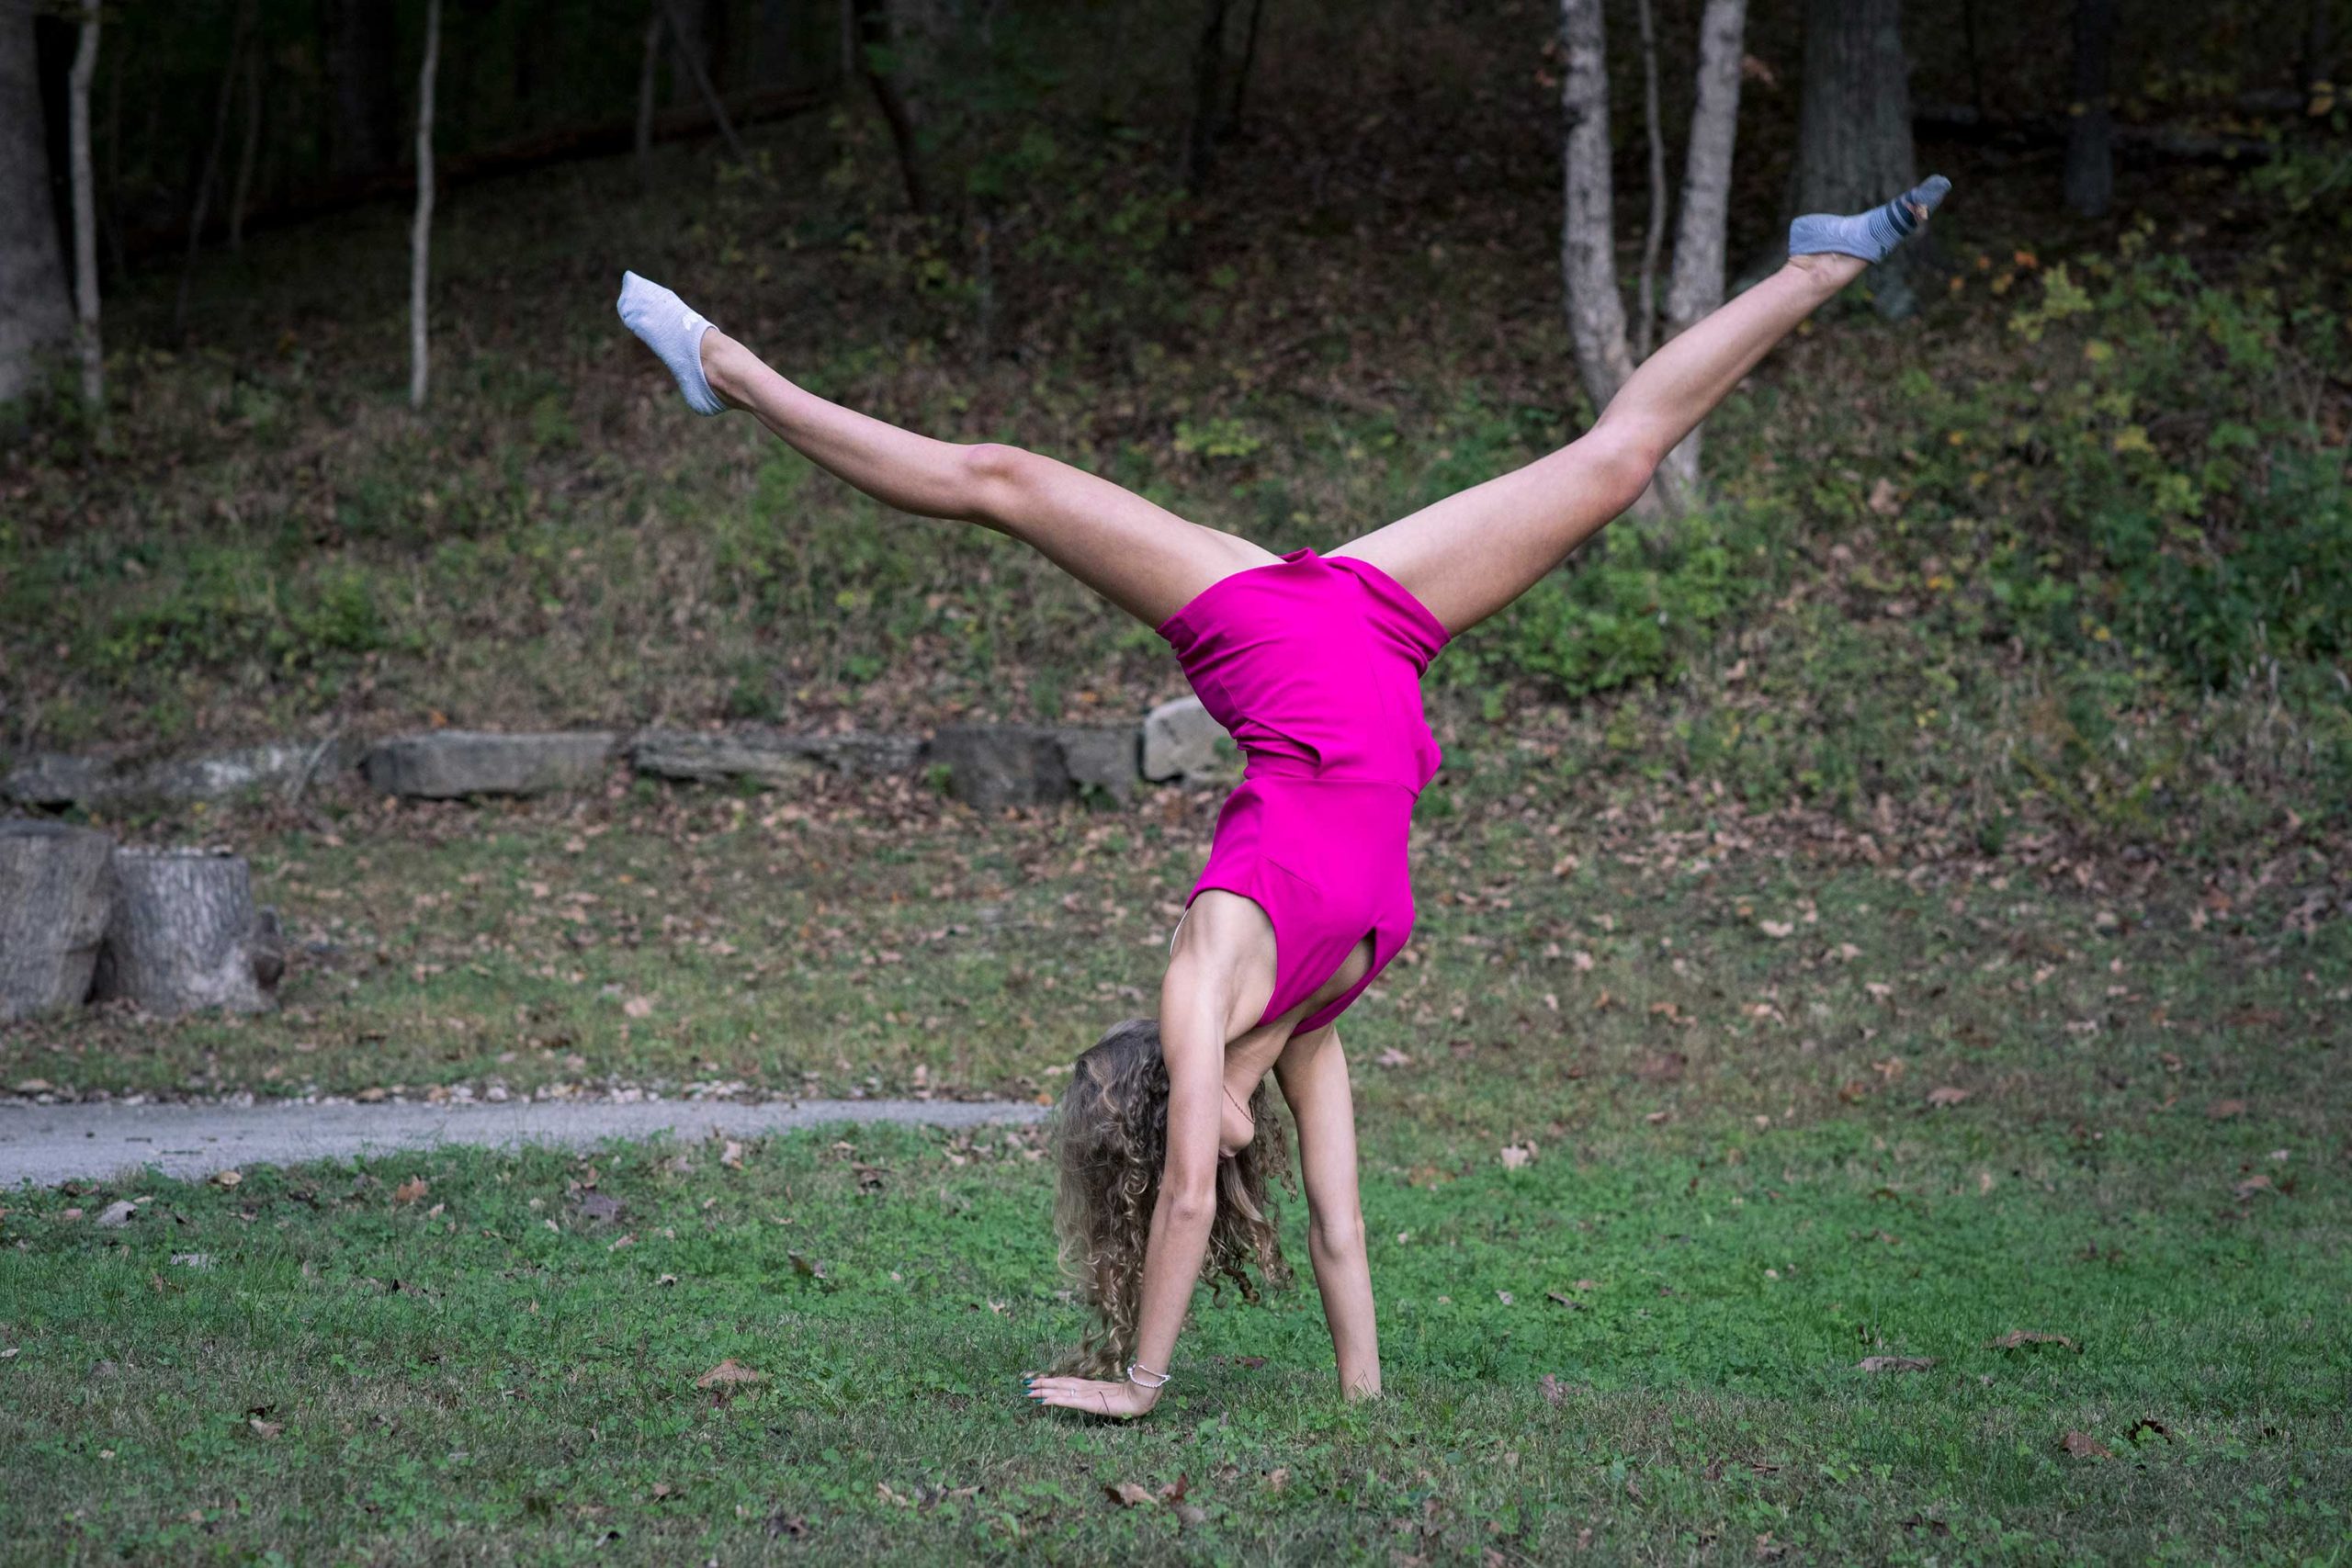 Senior Girl in Woods doing cartwheel during Autumn.